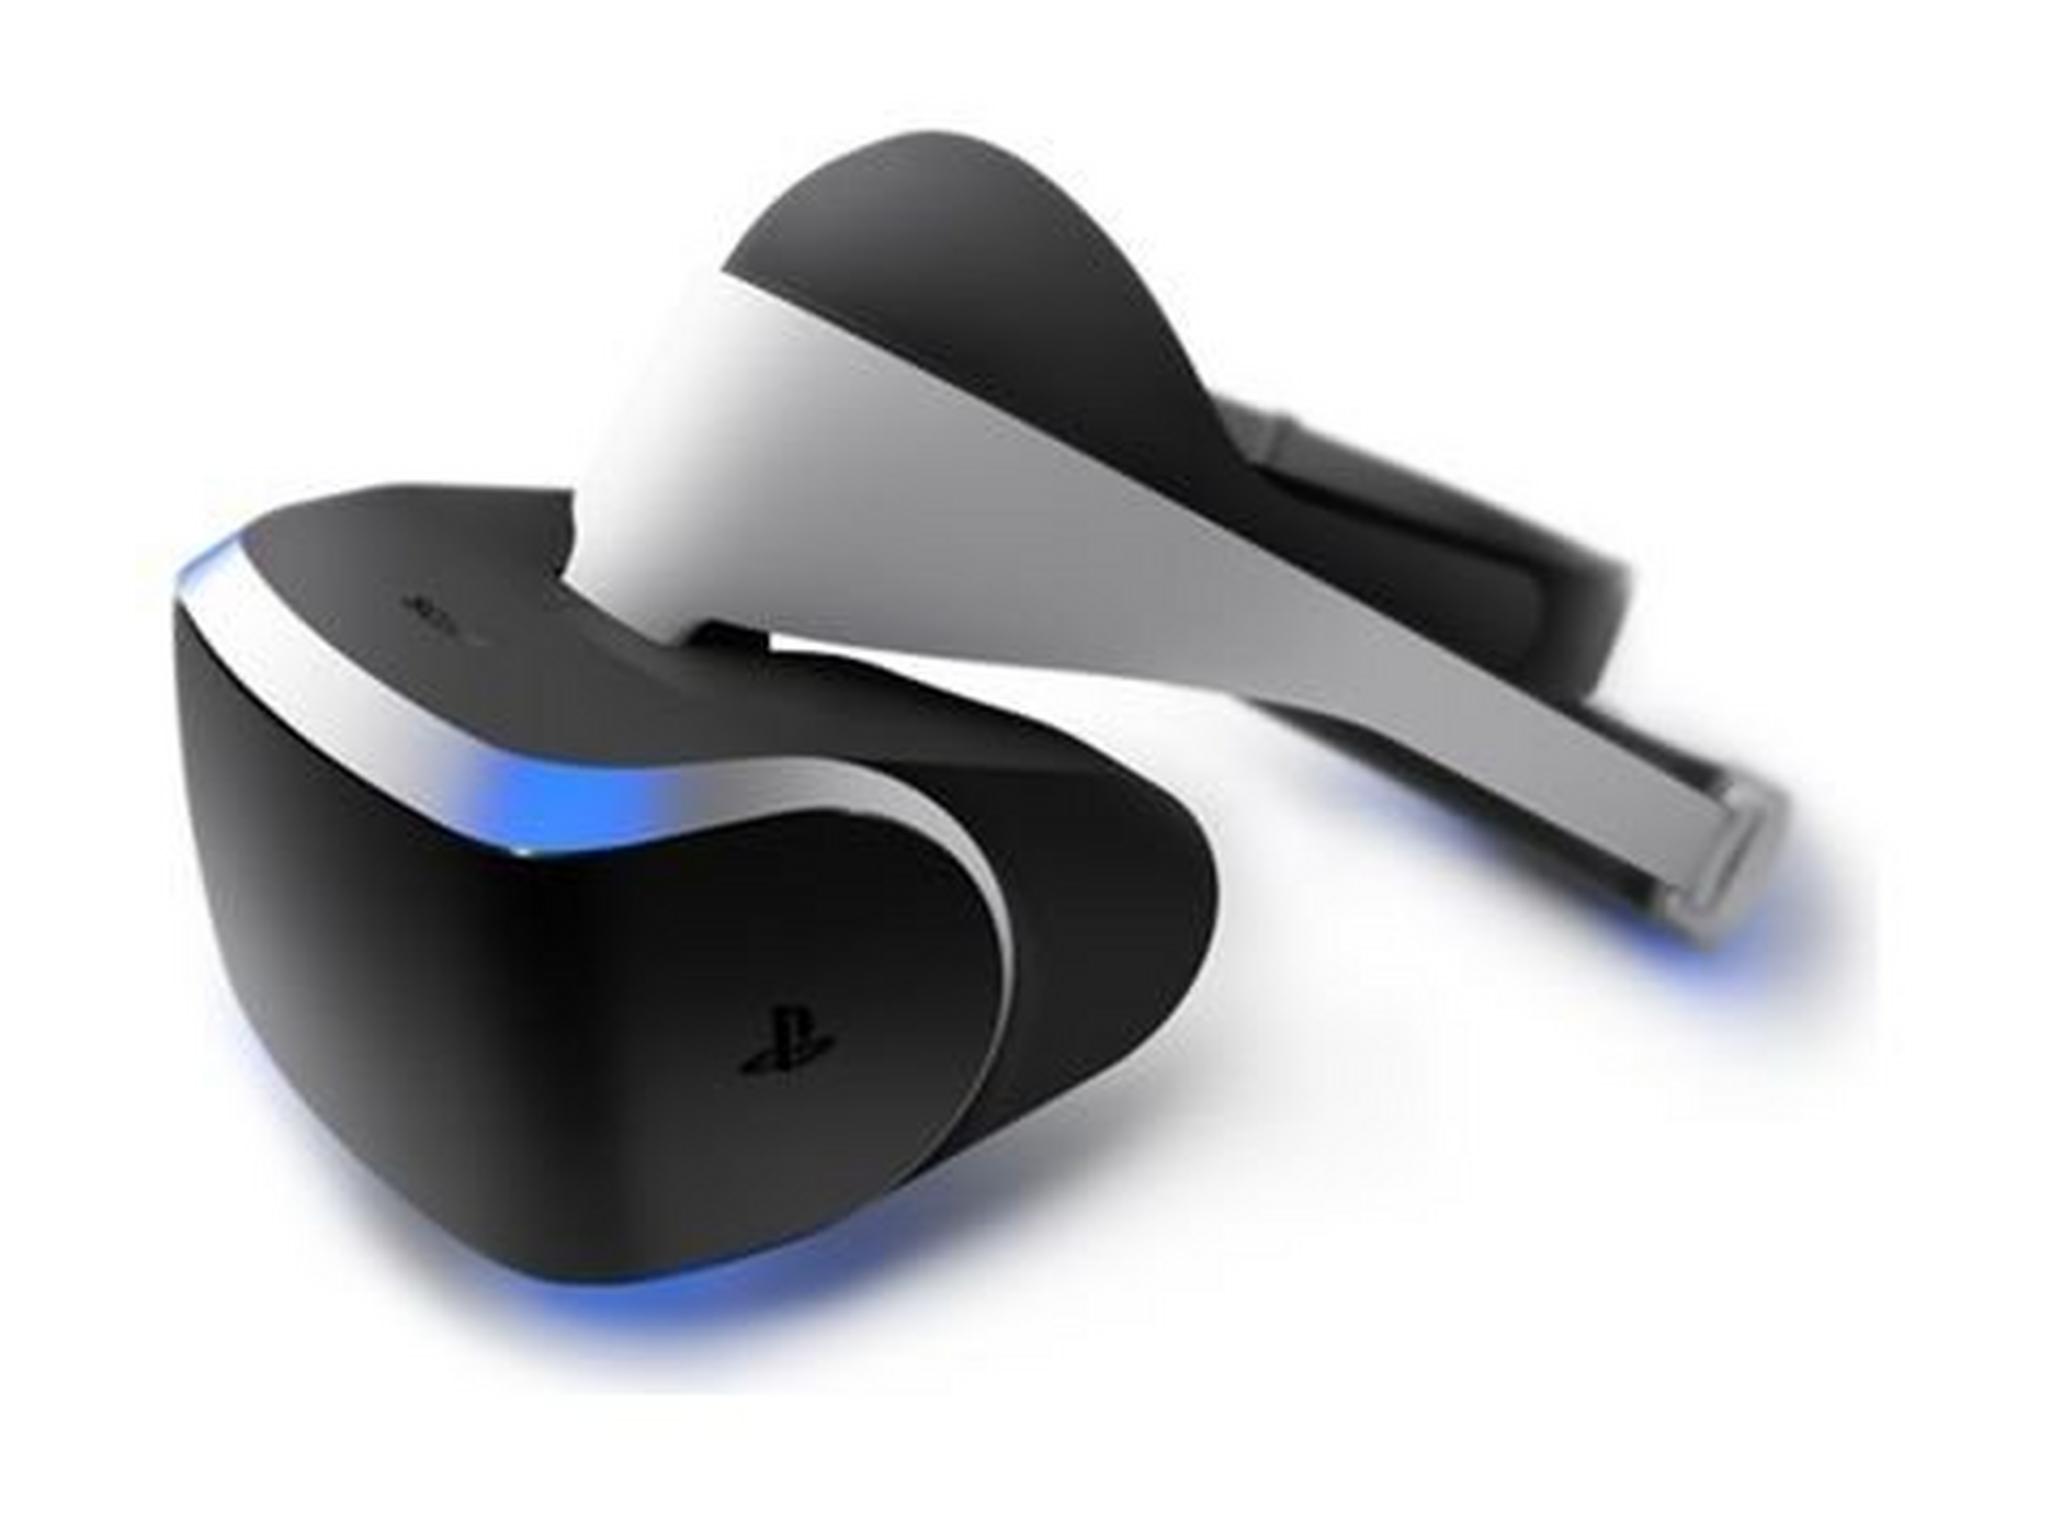 PlayStation 4 VR Headset + Camera (CUH-ZVR1EY/CAM) – Black